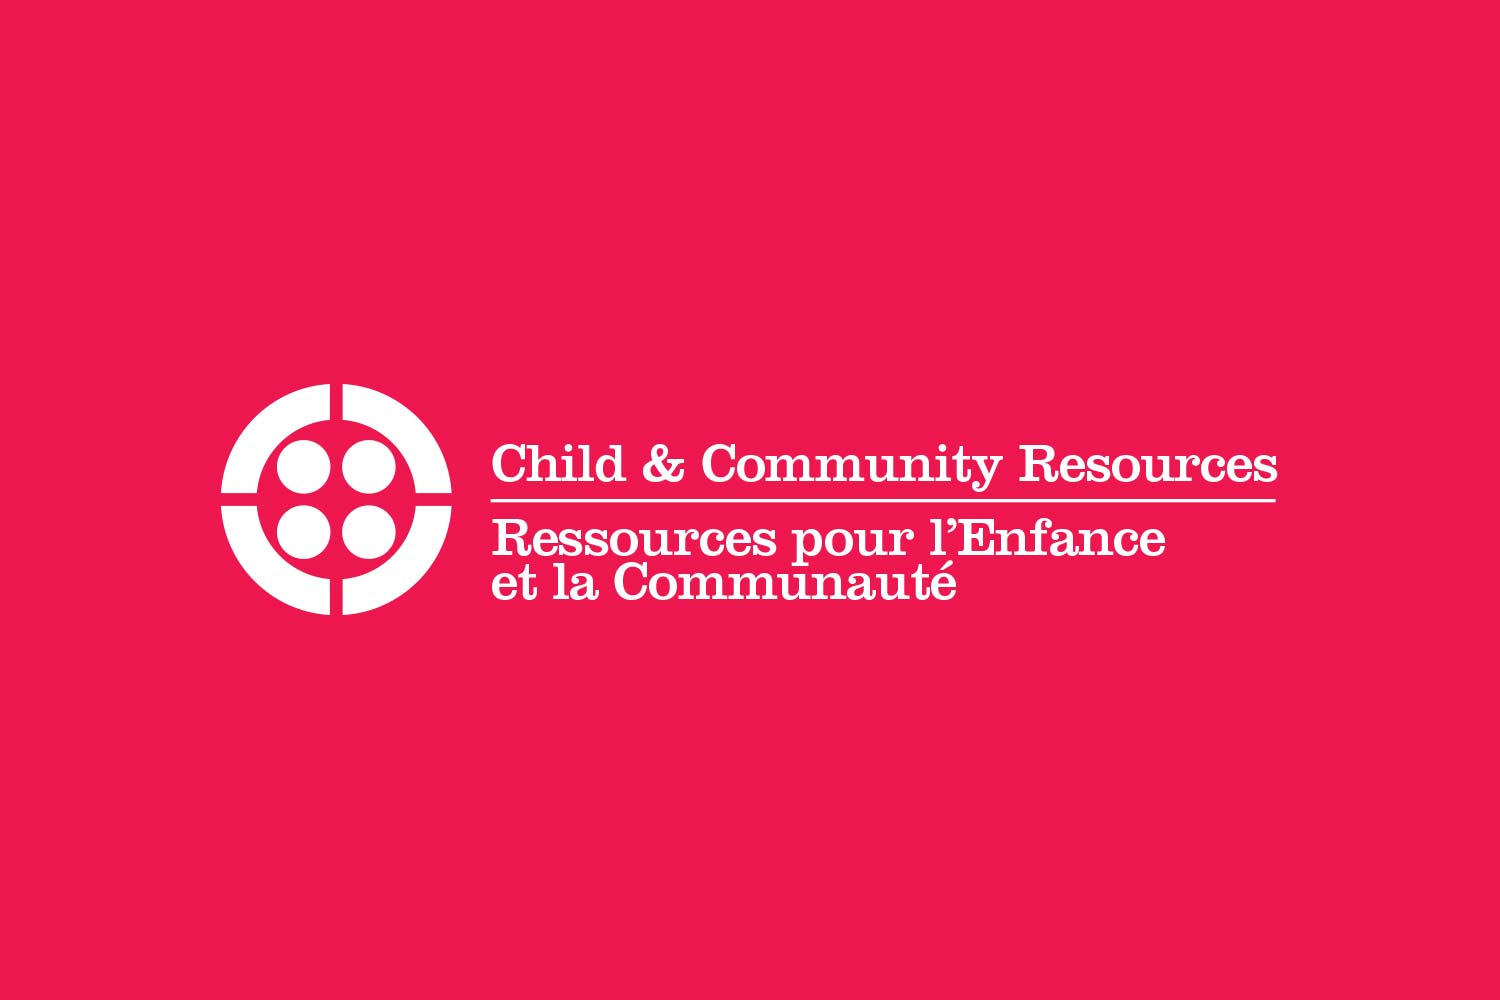 Child & Community Resources